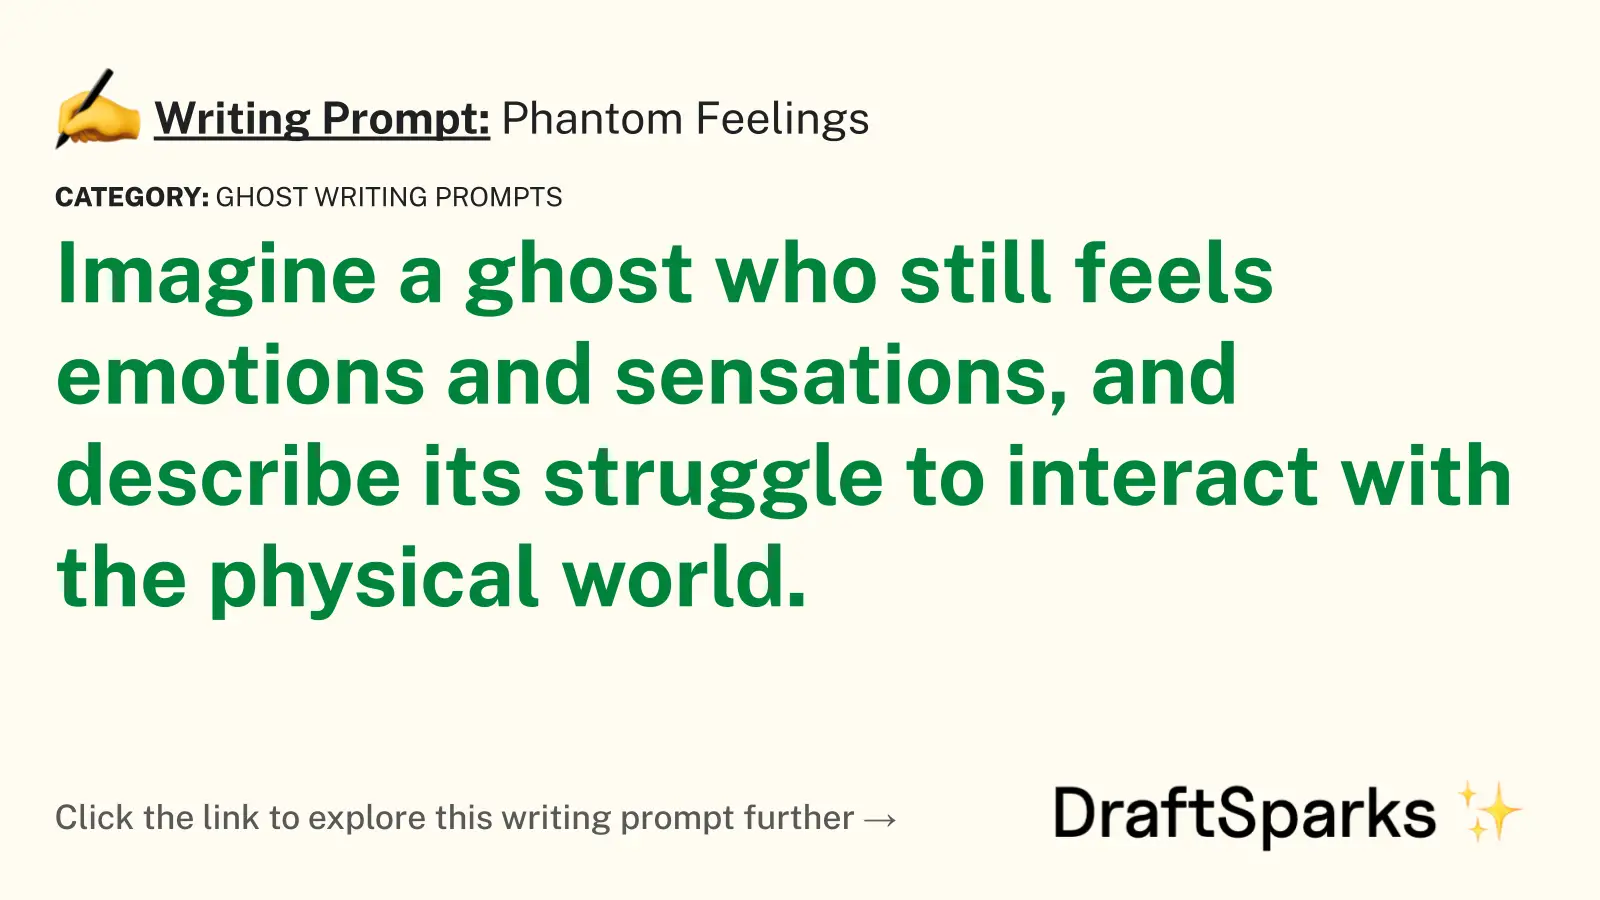 Phantom Feelings